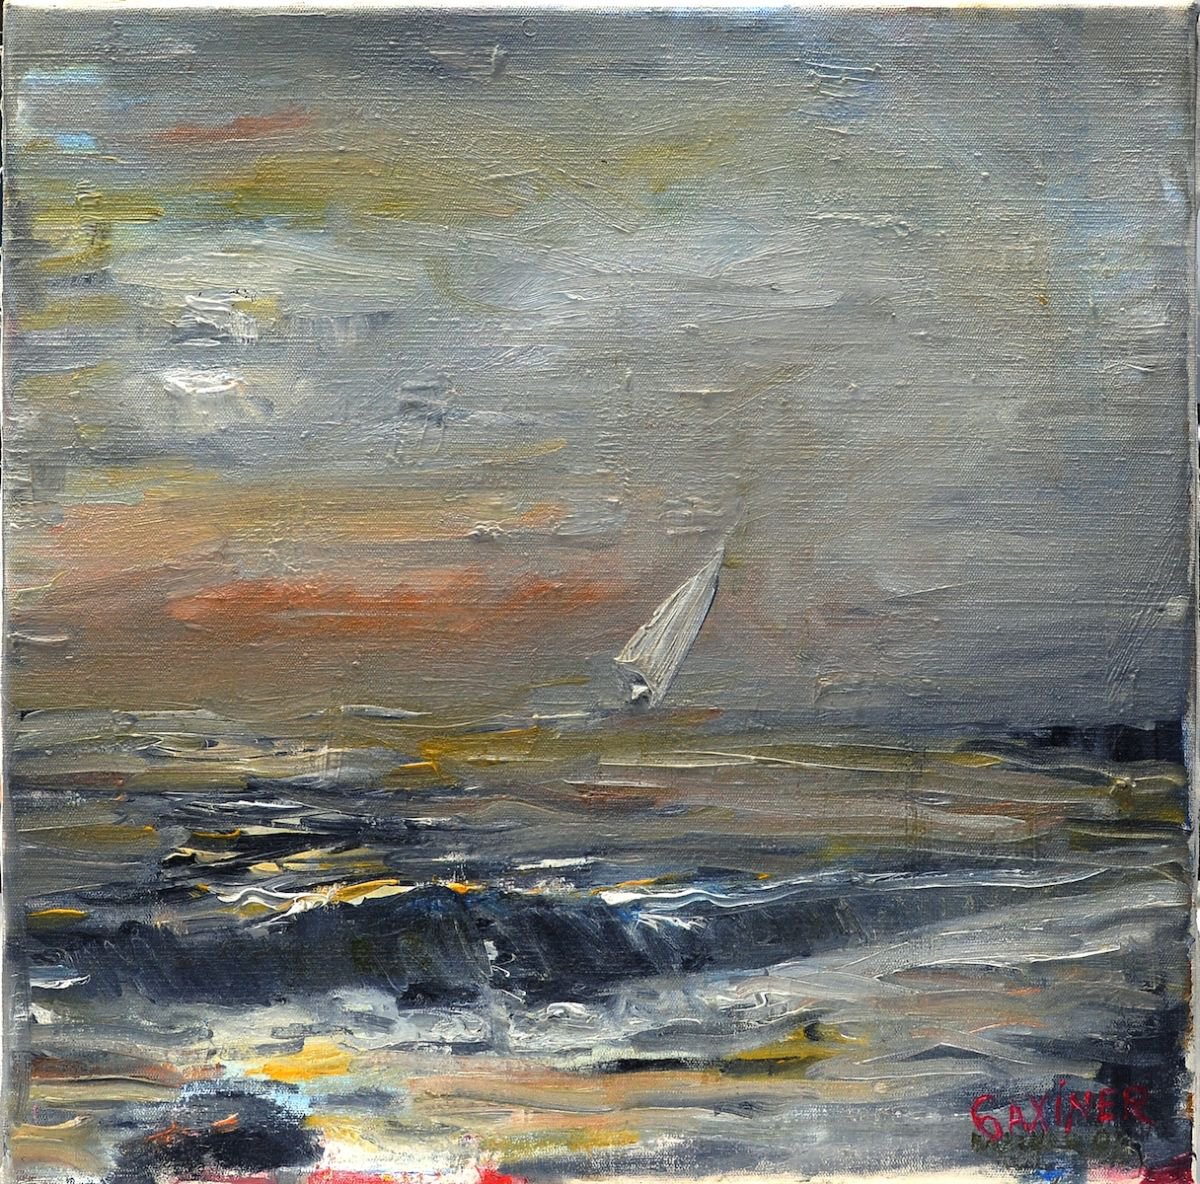 Sea. Sail. Boat. by Leo Baxiner